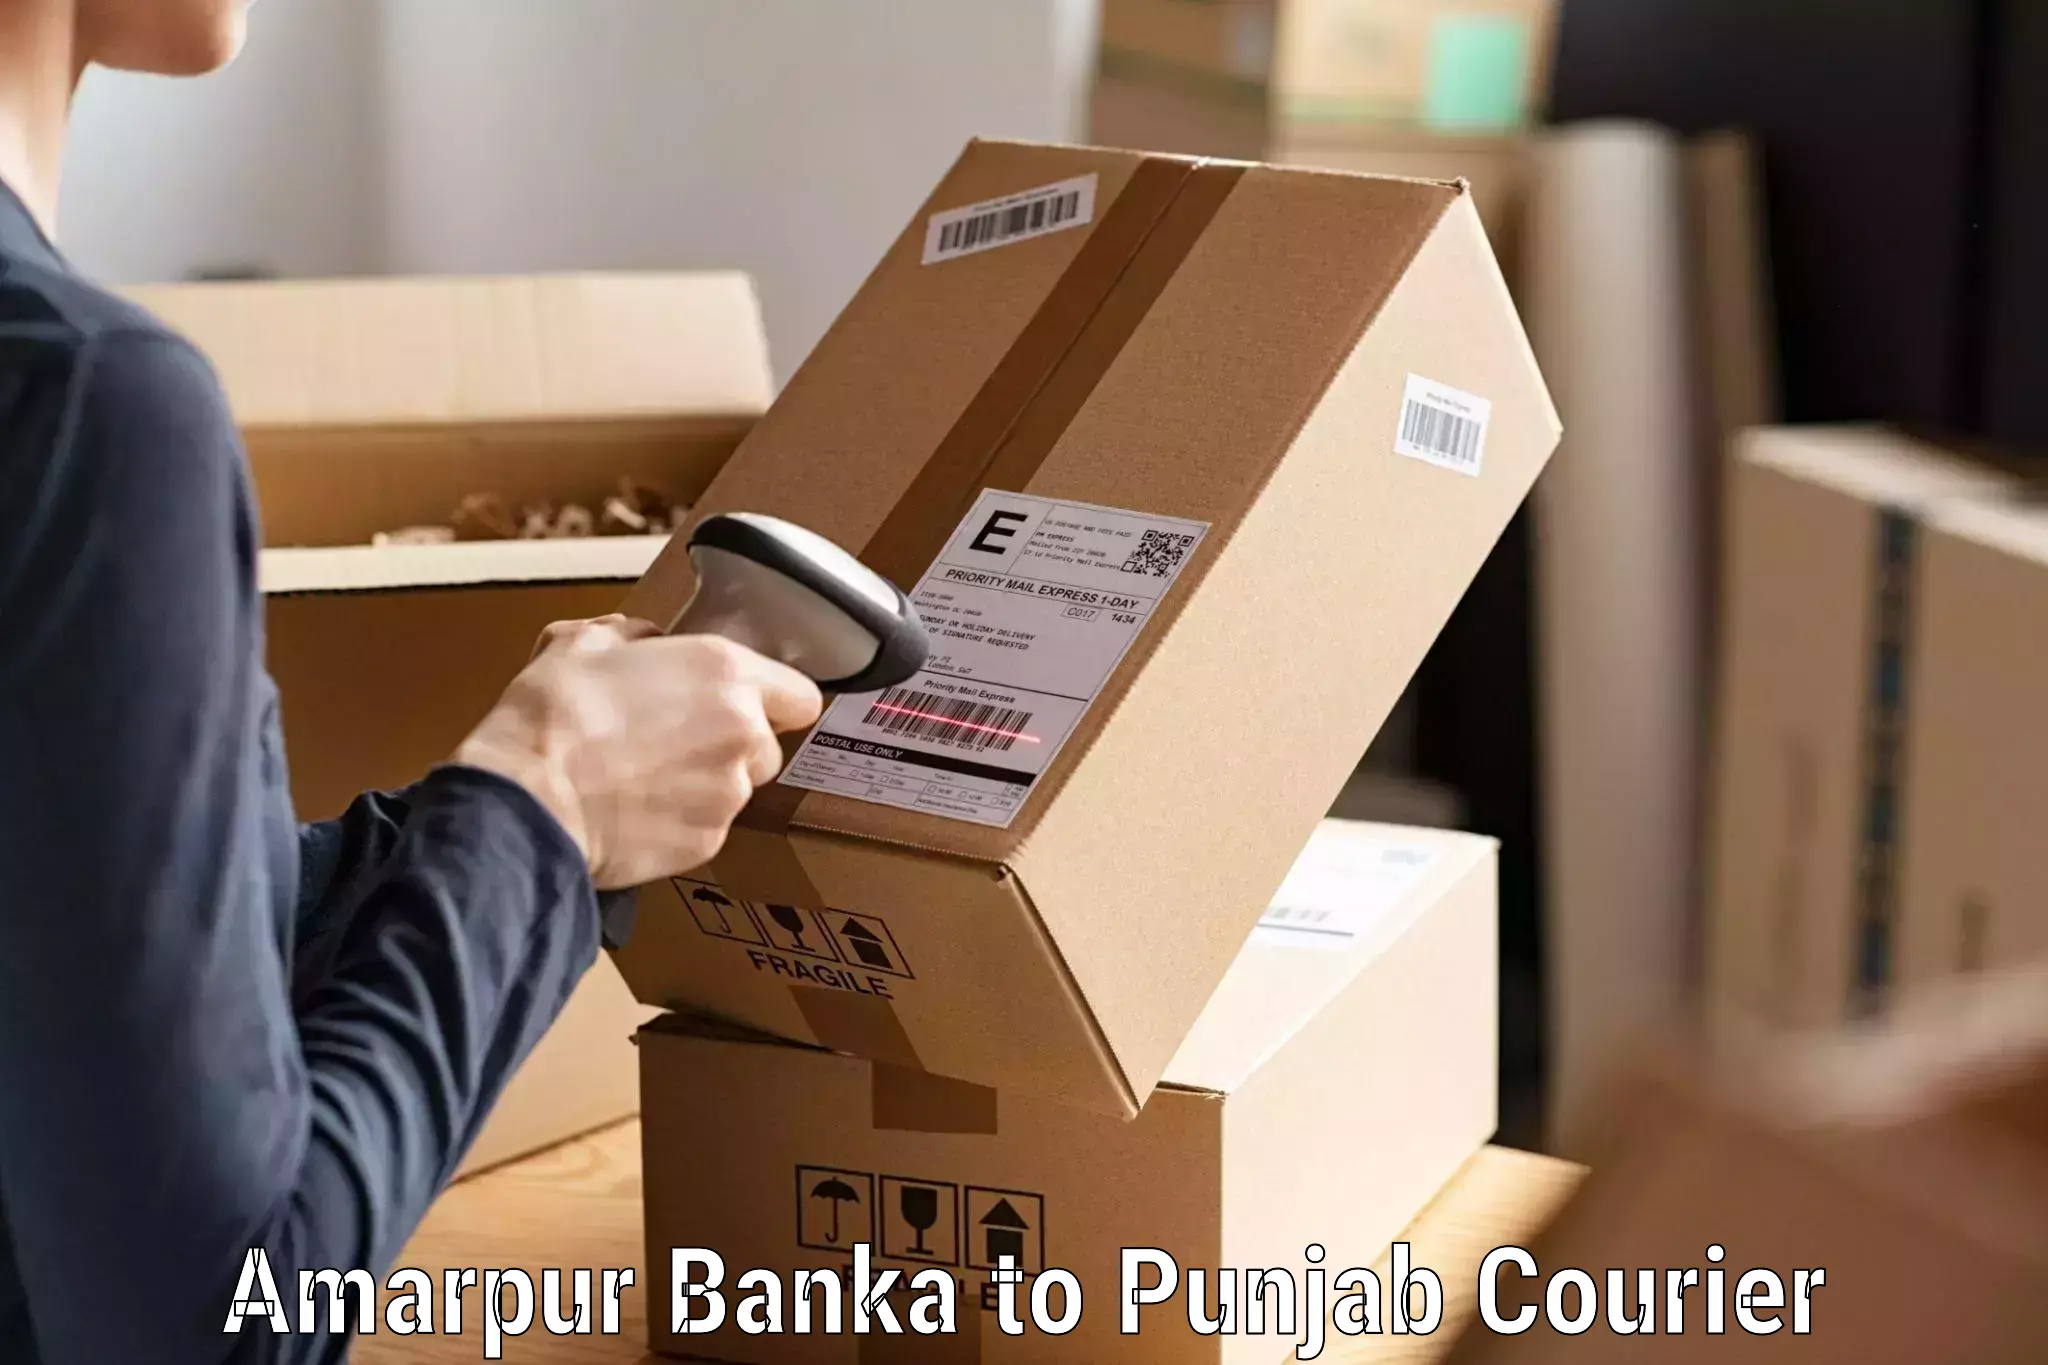 Parcel handling and care Amarpur Banka to Talwara